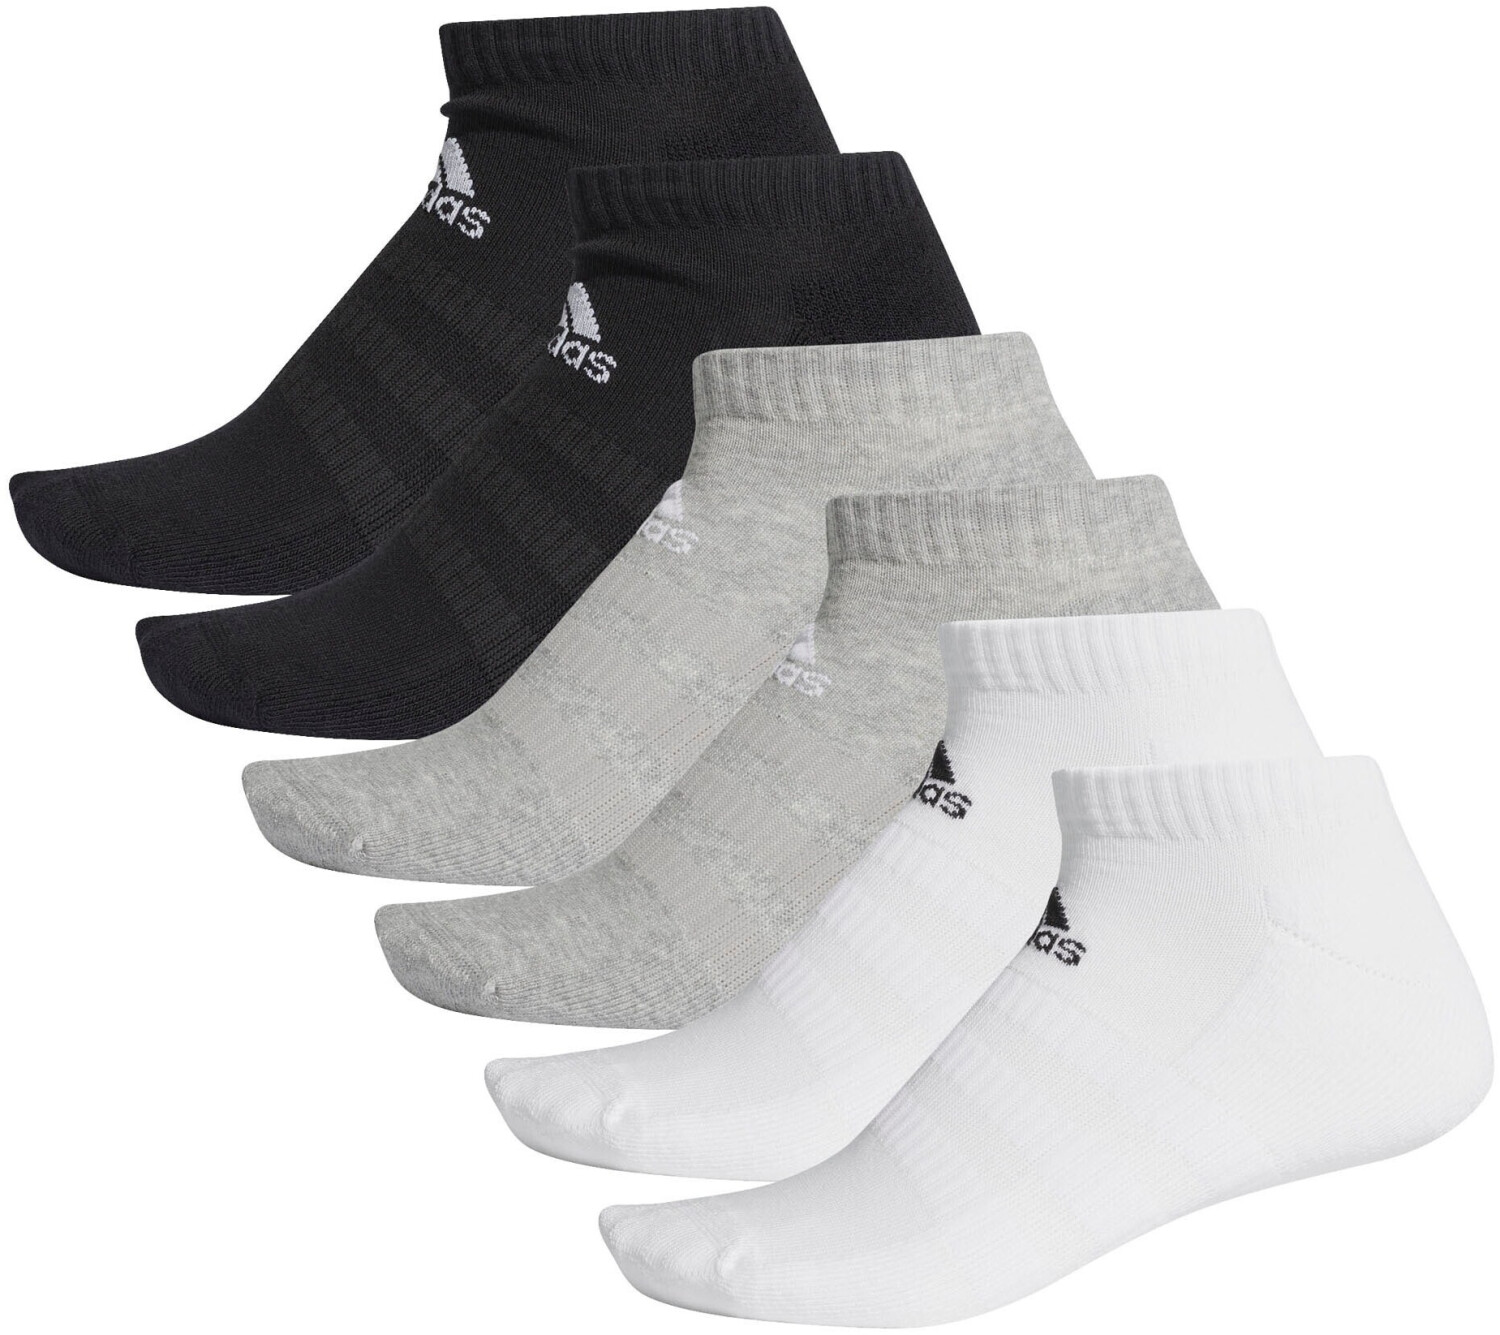 14,85 € | Preisvergleich Socks Adidas Cushioned grey/black/white bei 6-Pack ab Low-Cut